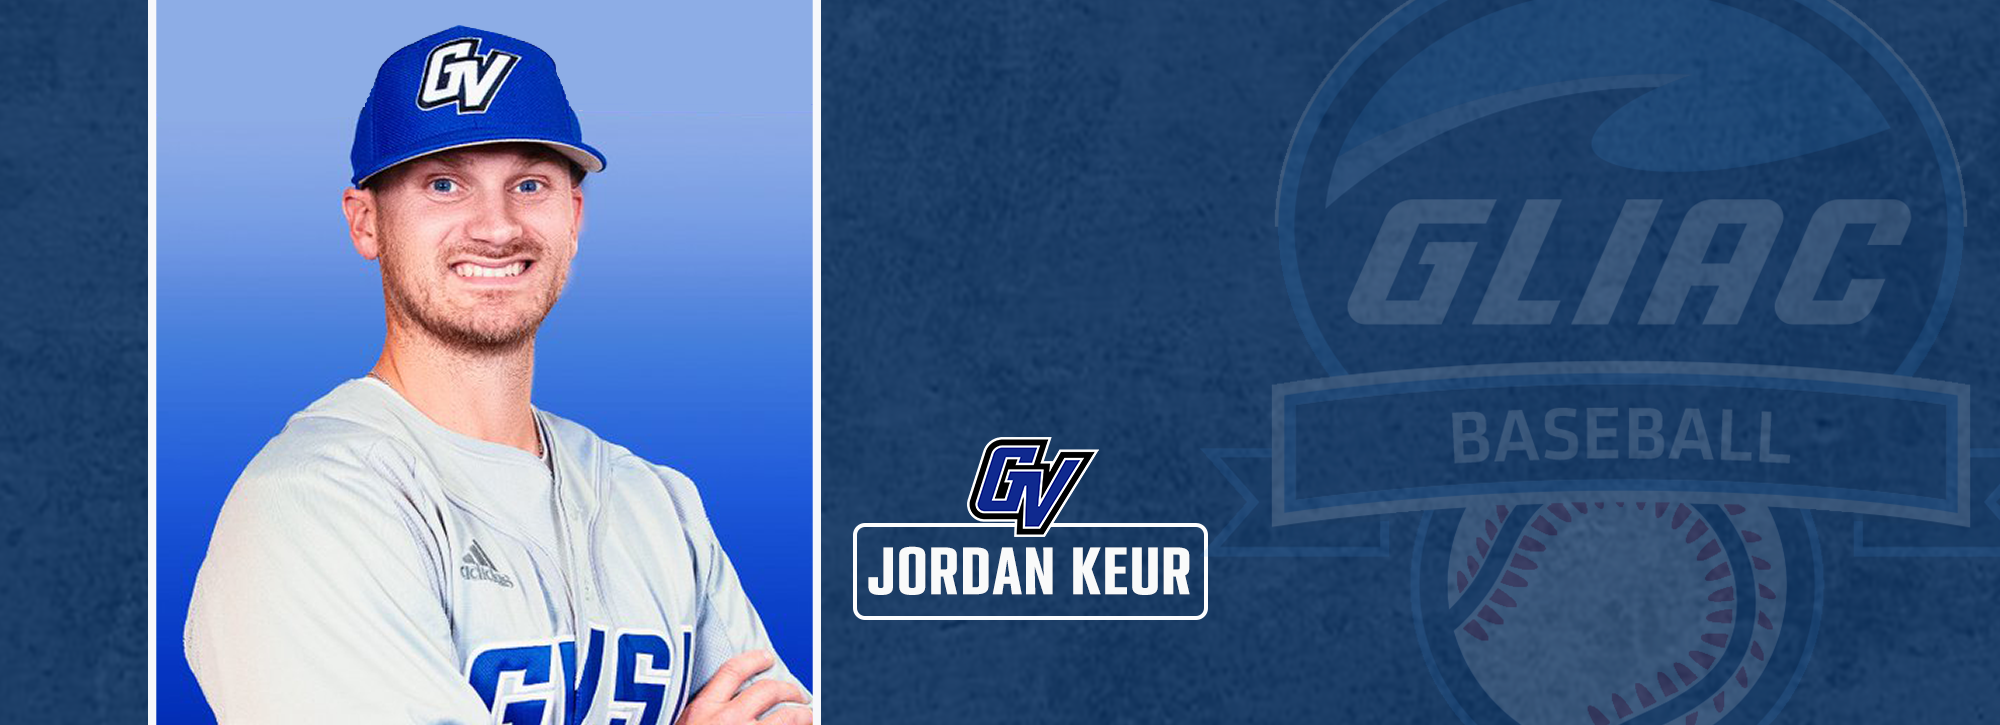 Grand Valley State names Jordan Keur head baseball coach